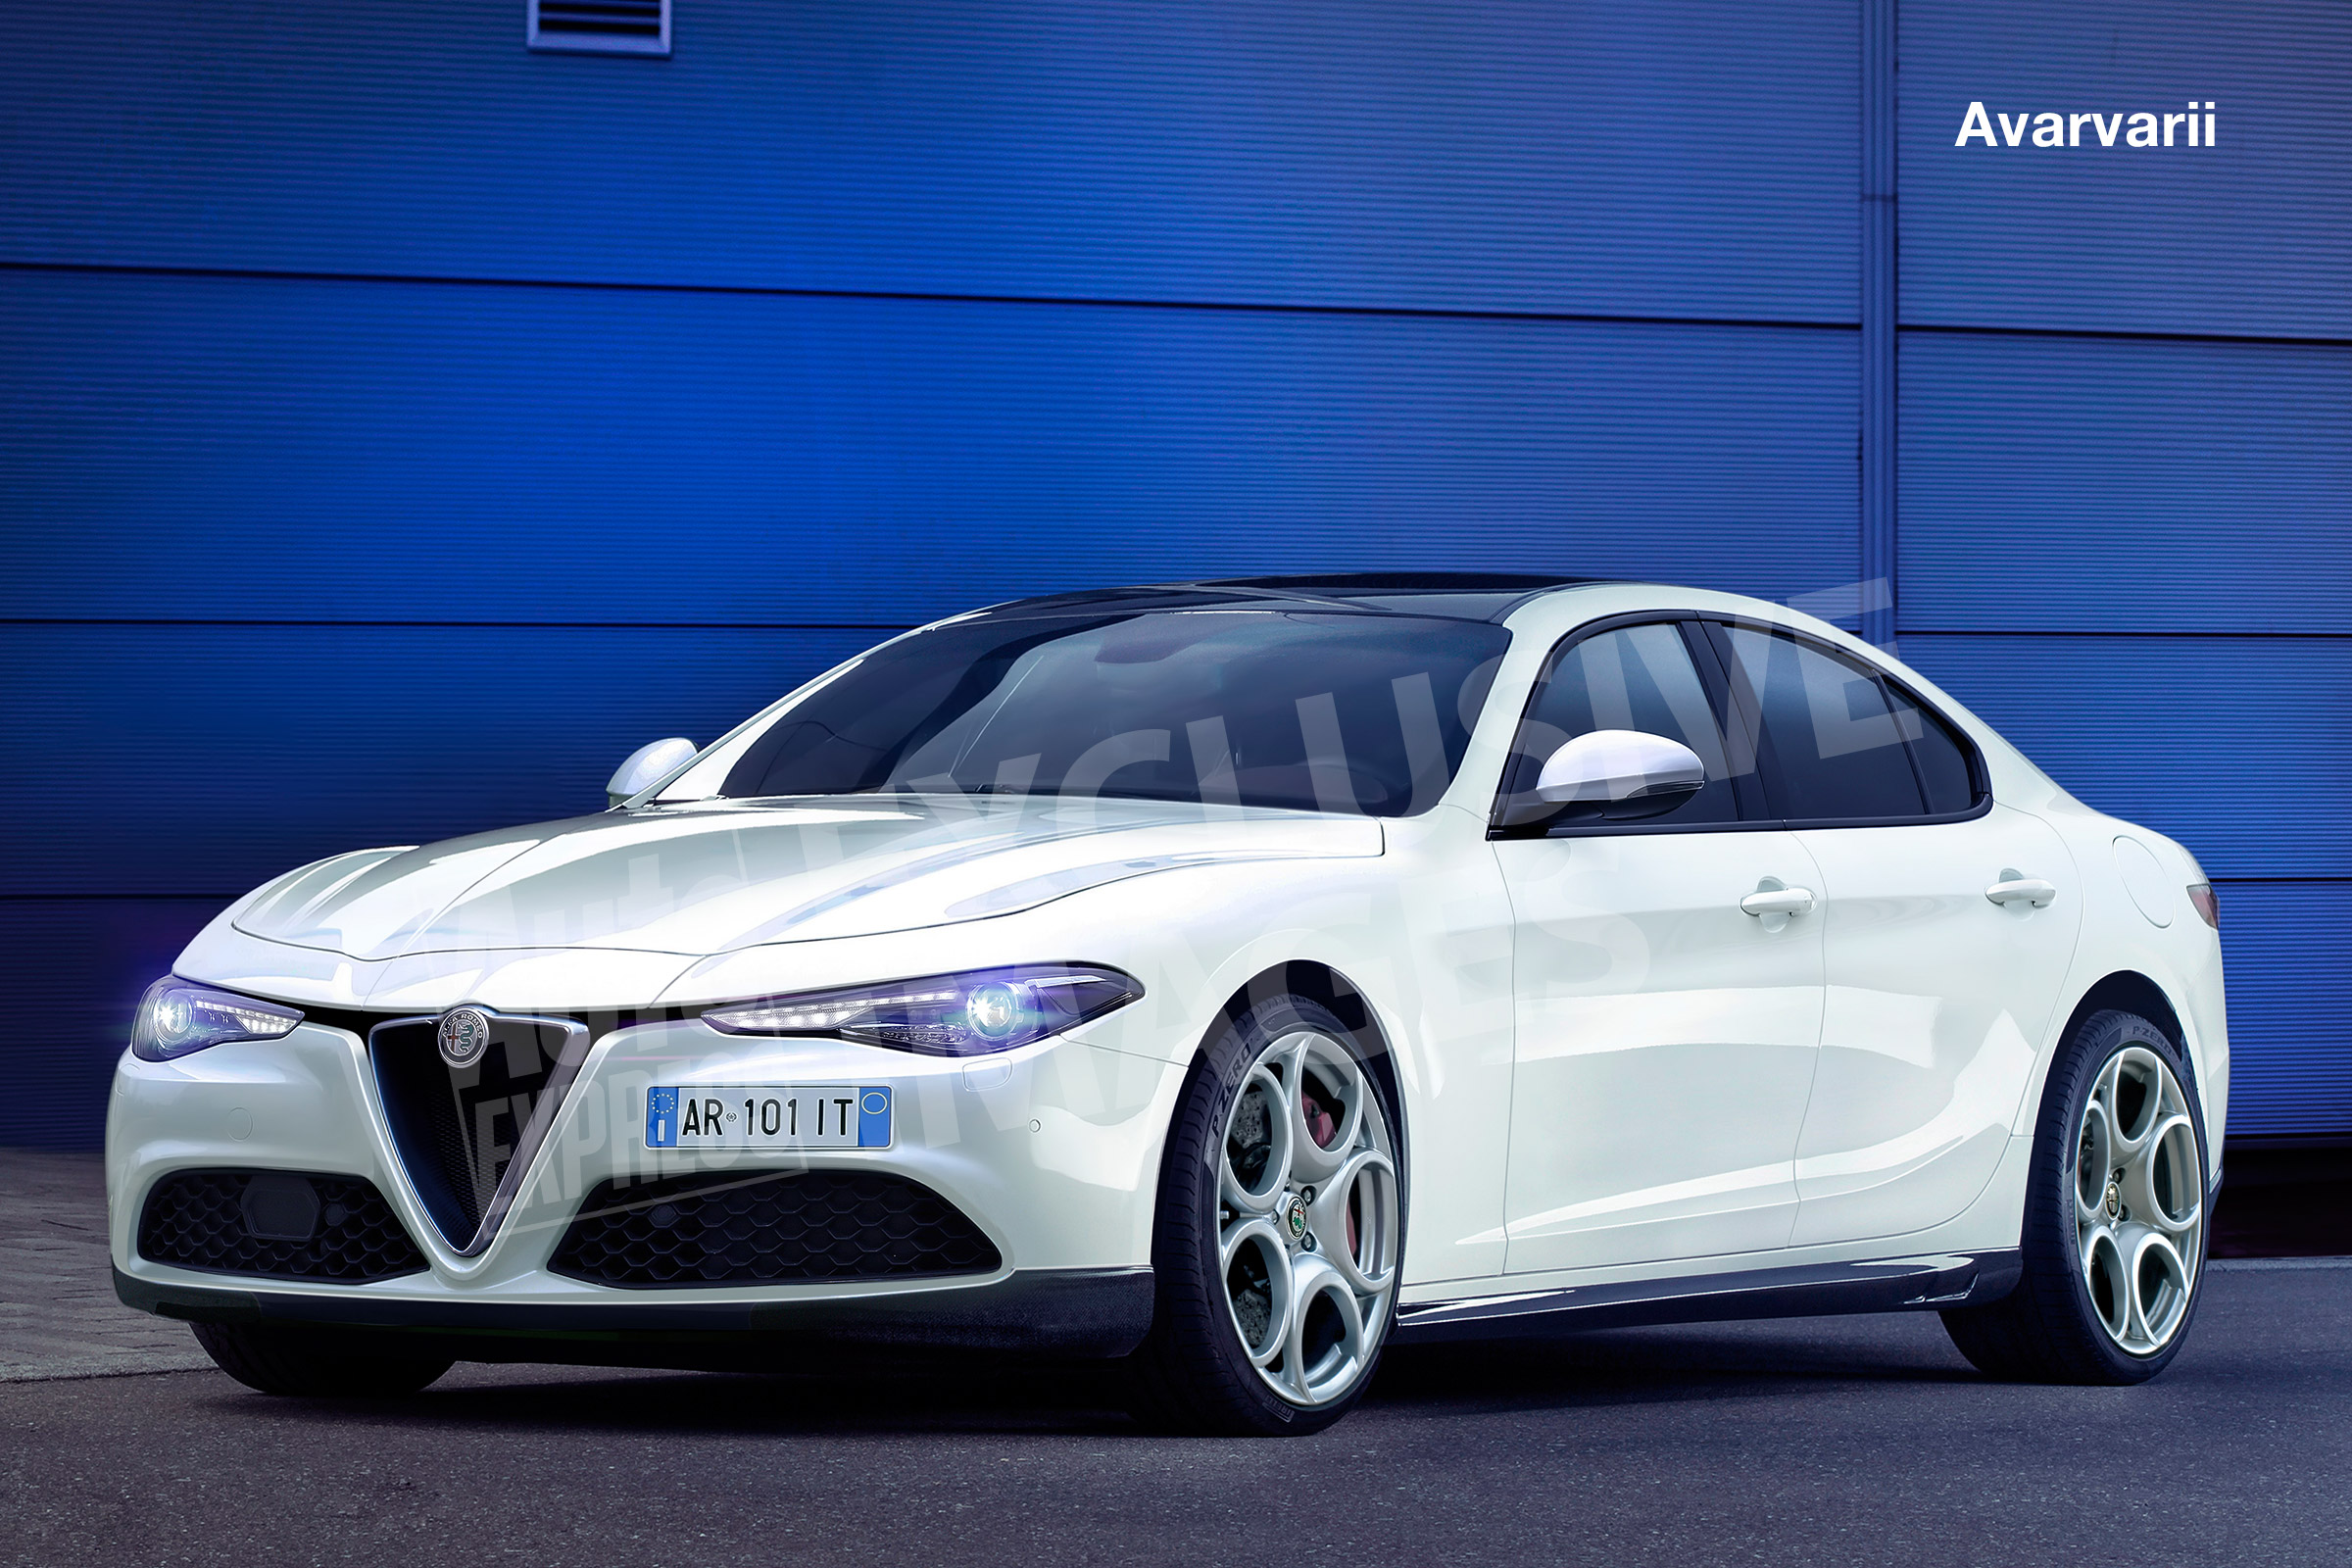 Alfa Romeo S New Bmw Series Rival Revealed Auto Express